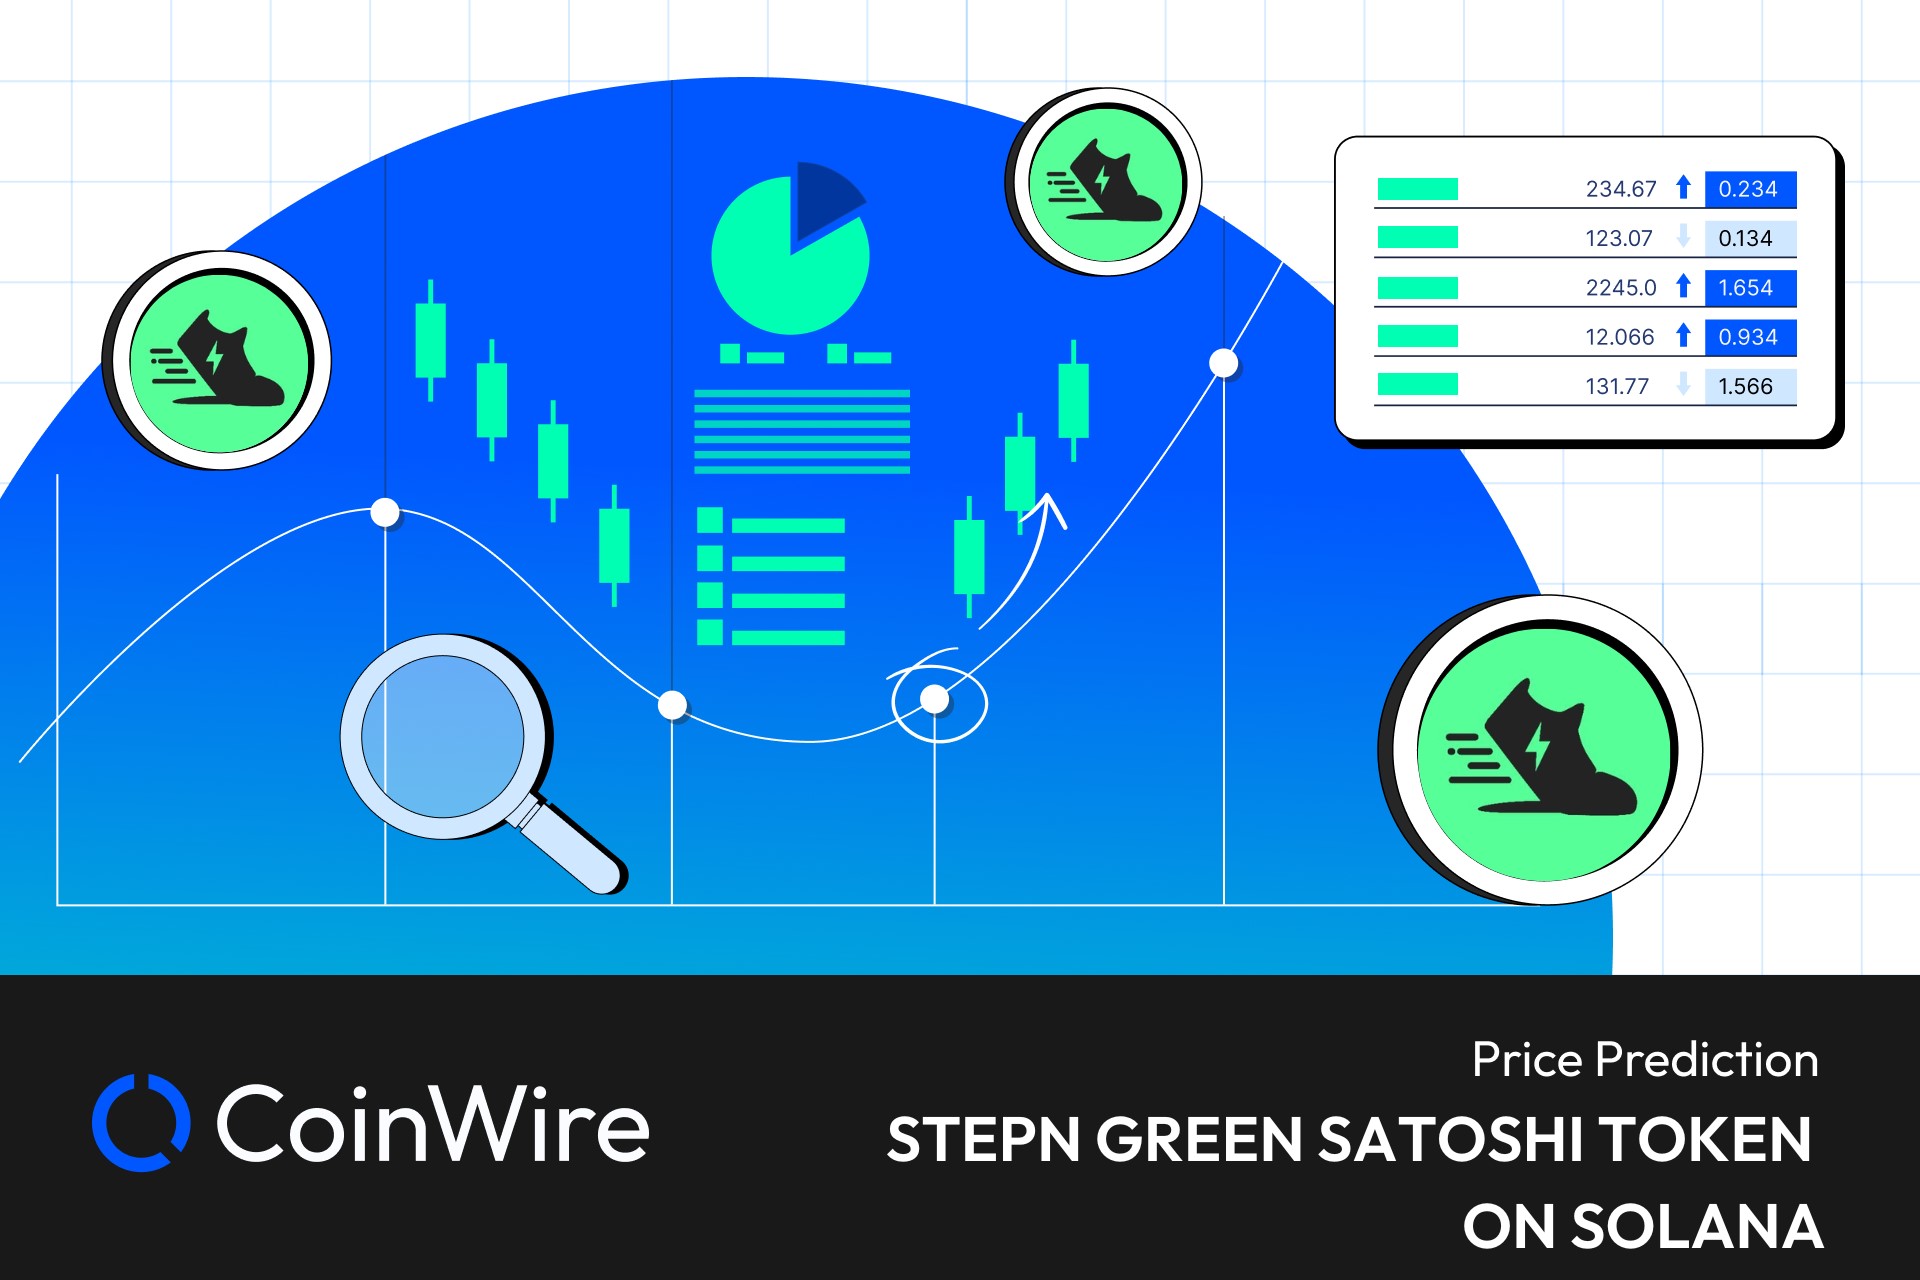 STEPN Green Satoshi Token on Solana (GSTSOL) Price Prediction 2023